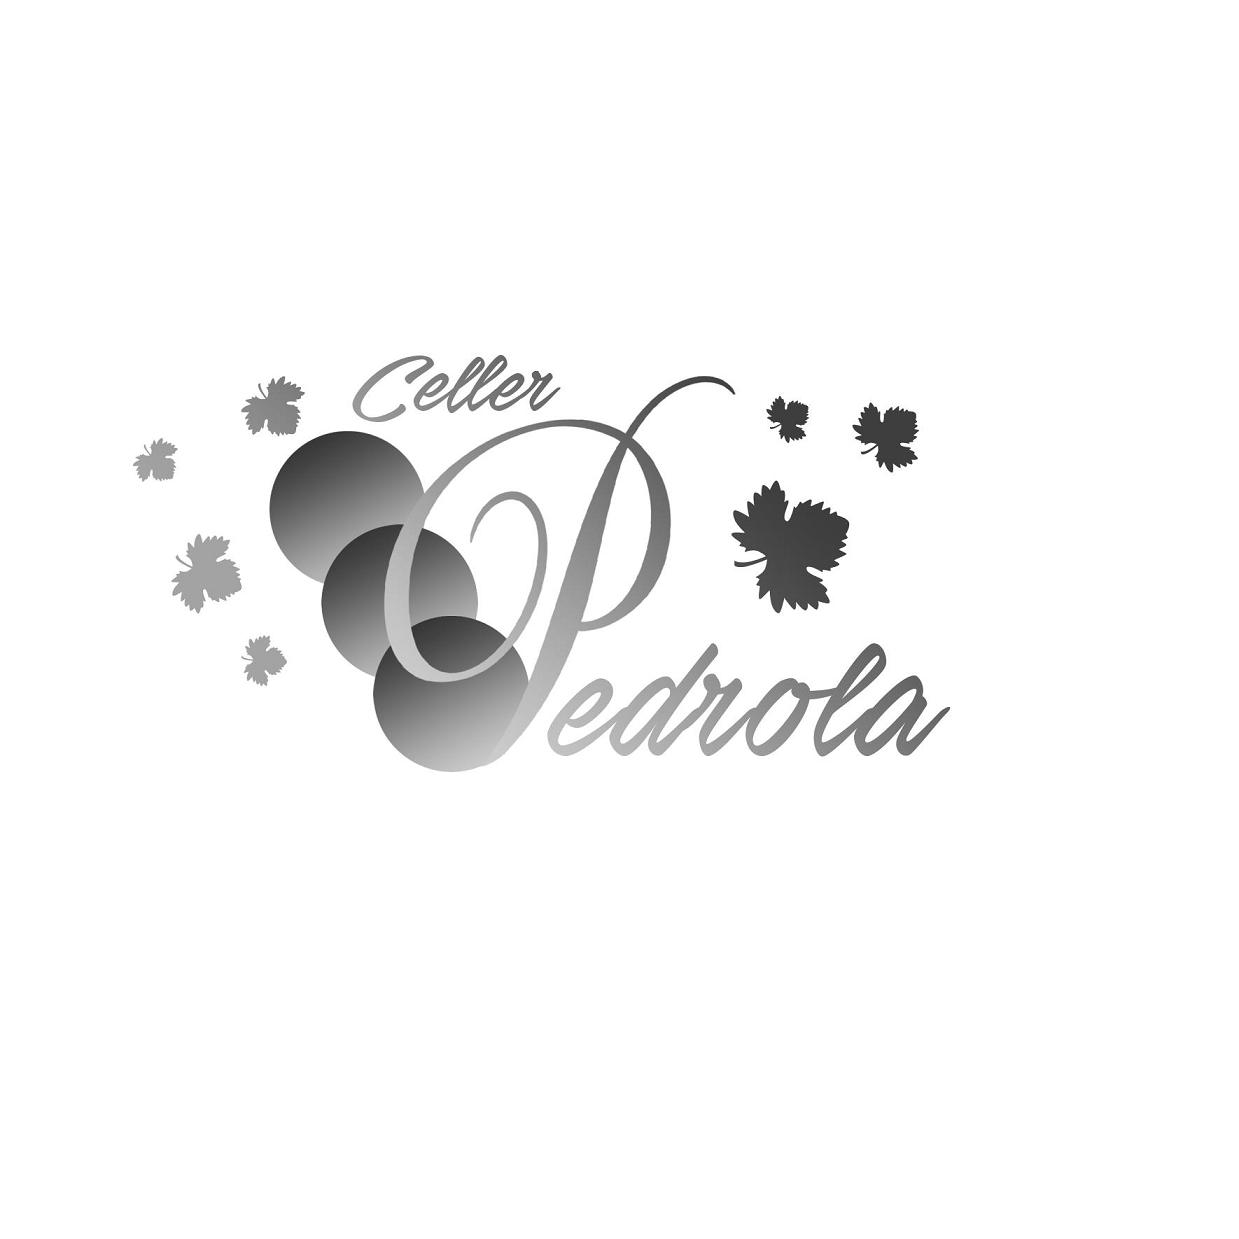 Celler Pedrola